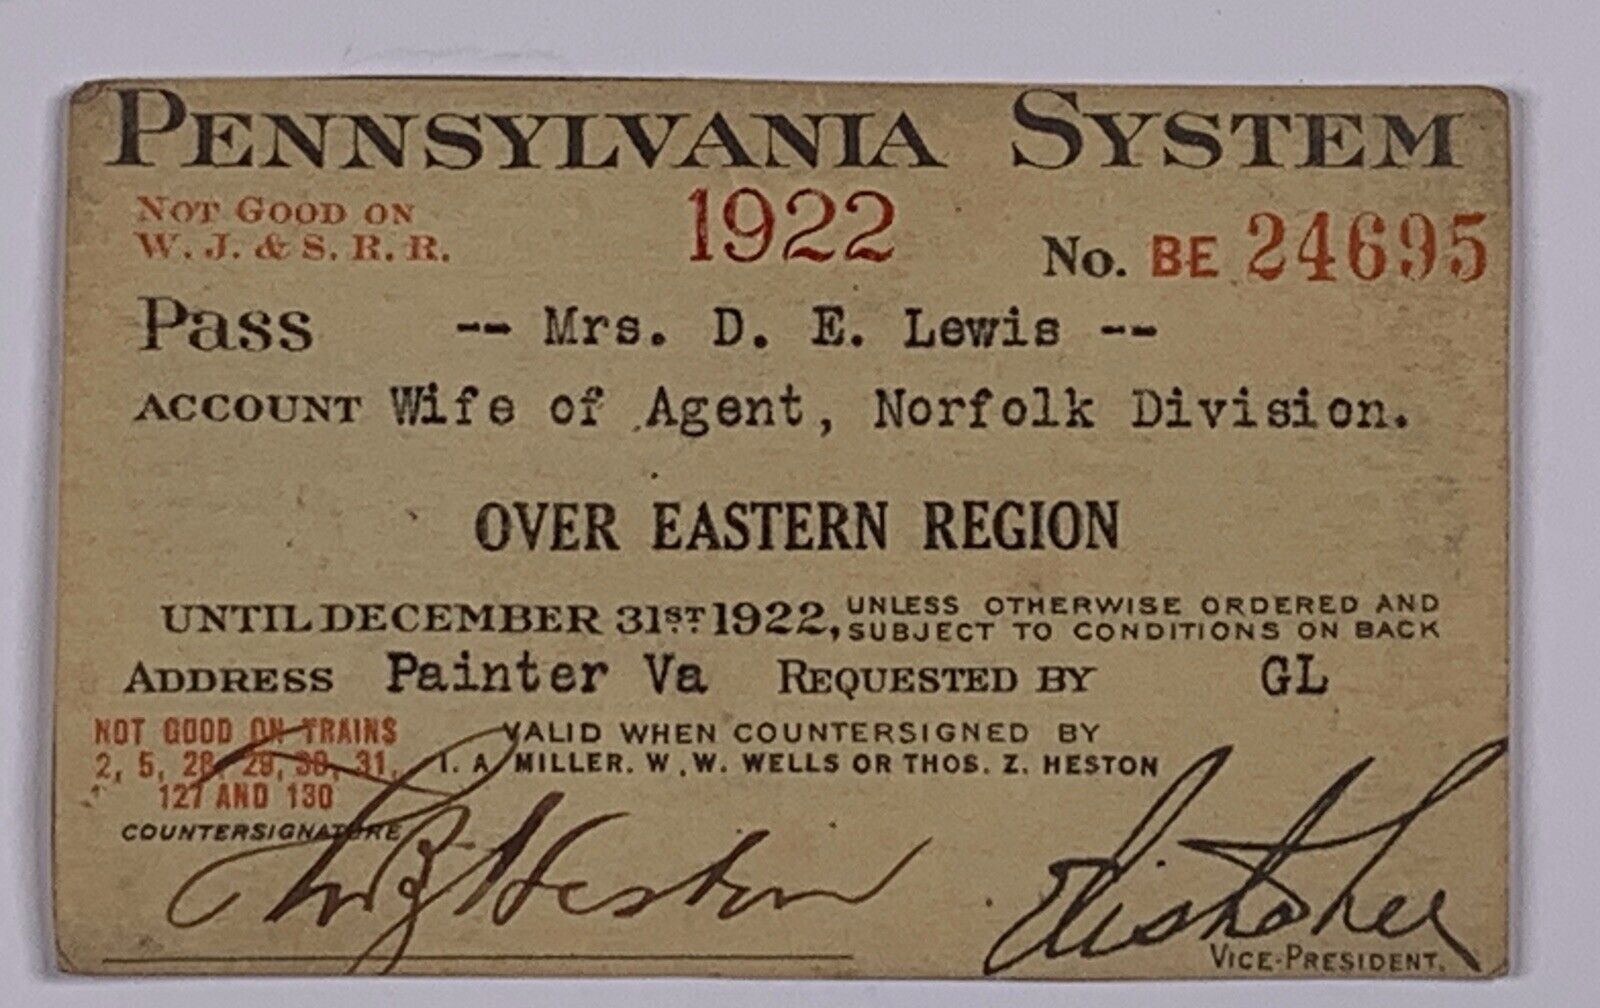 Railroad Pass Pennsylvania System 1922 BE 24695